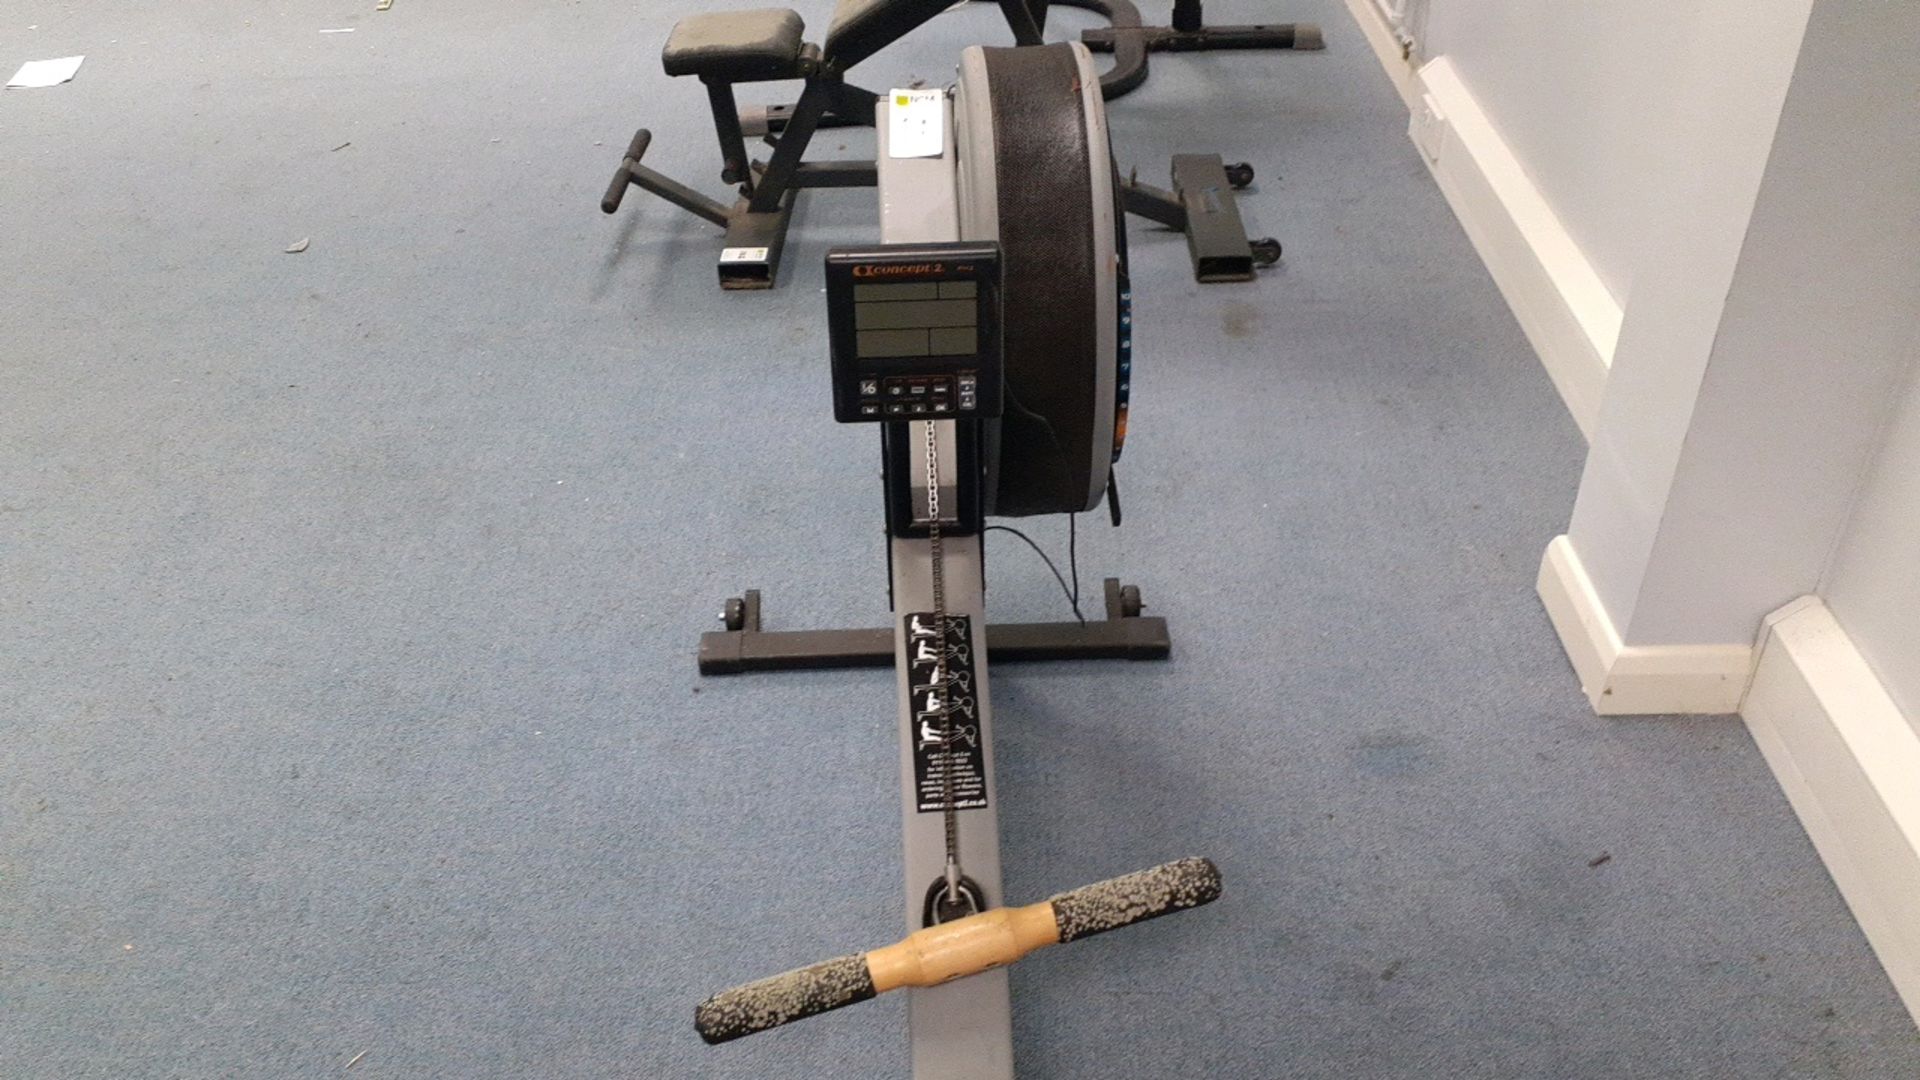 Rowing machine - Image 2 of 3